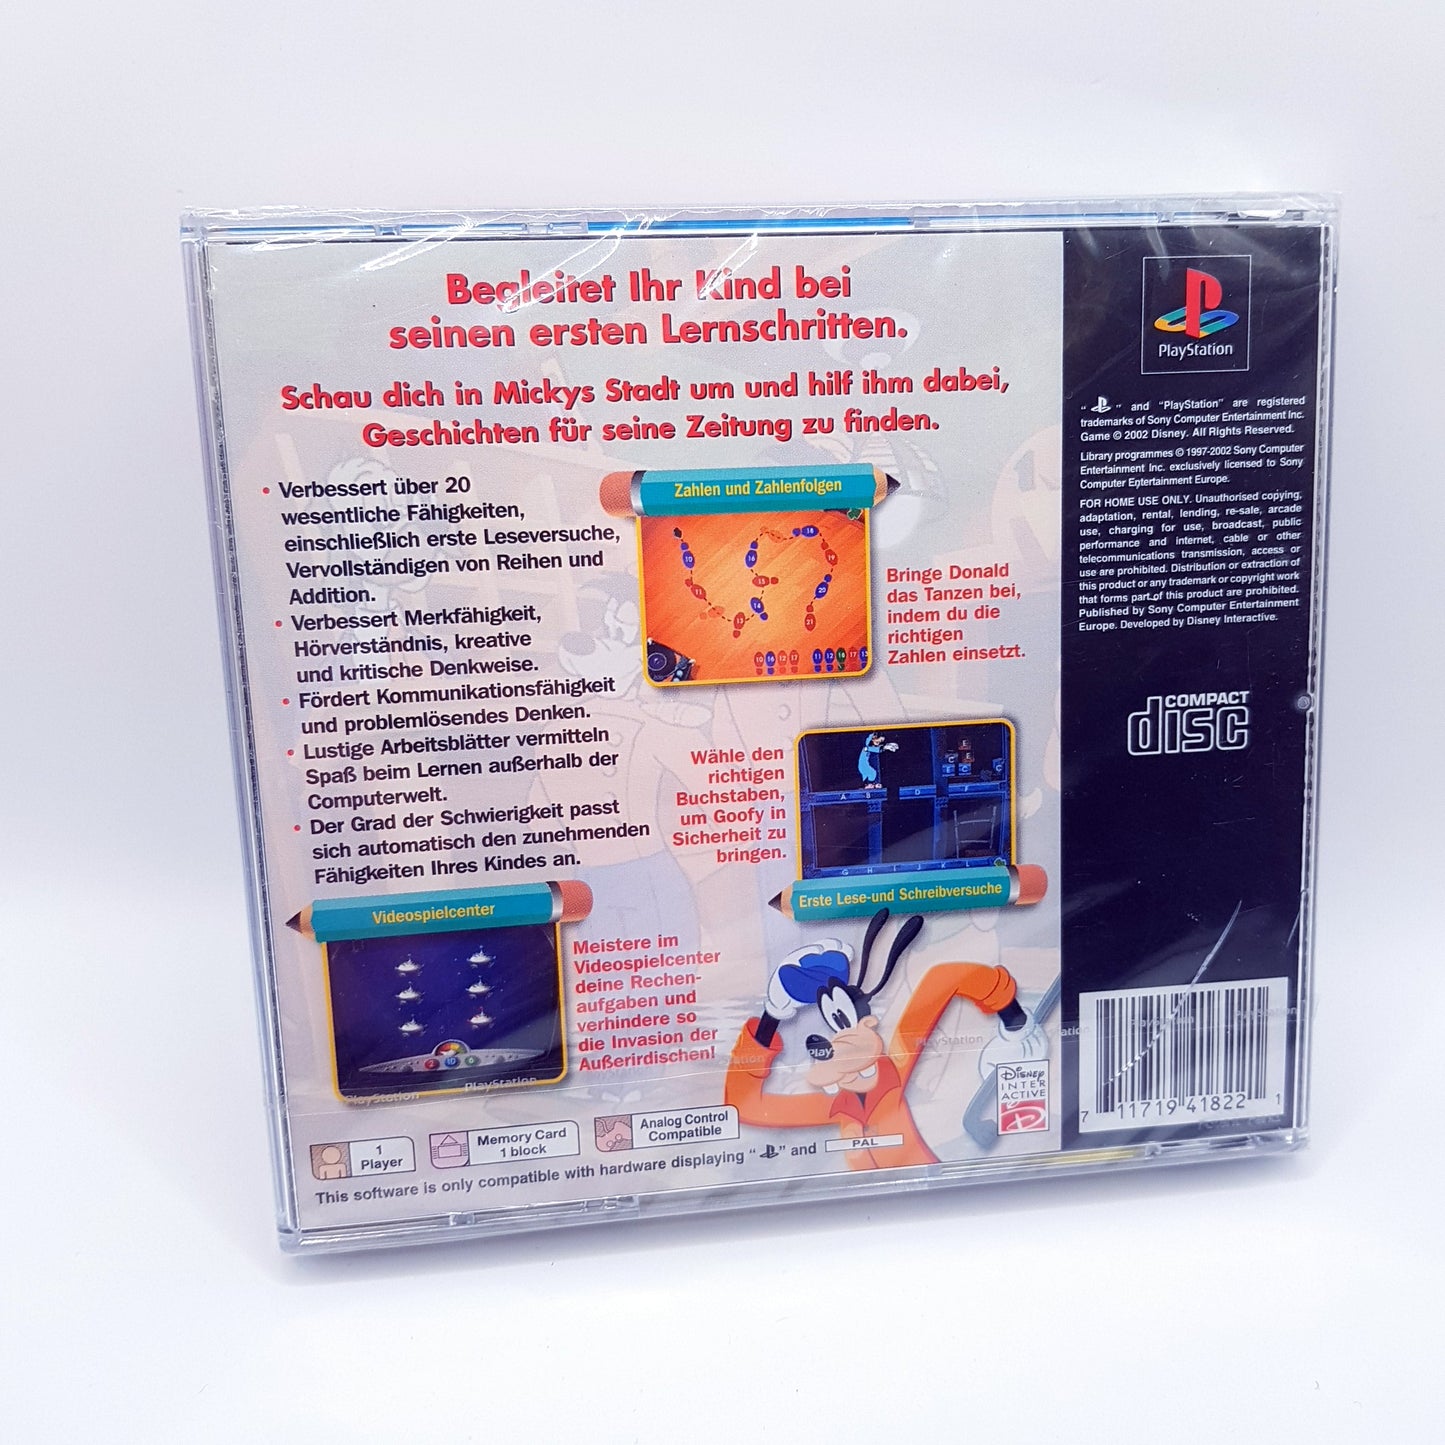 Ps1 Playstation 1 - Disney Frühes Lernen mit Micky - NEU in sealed OVP - rare